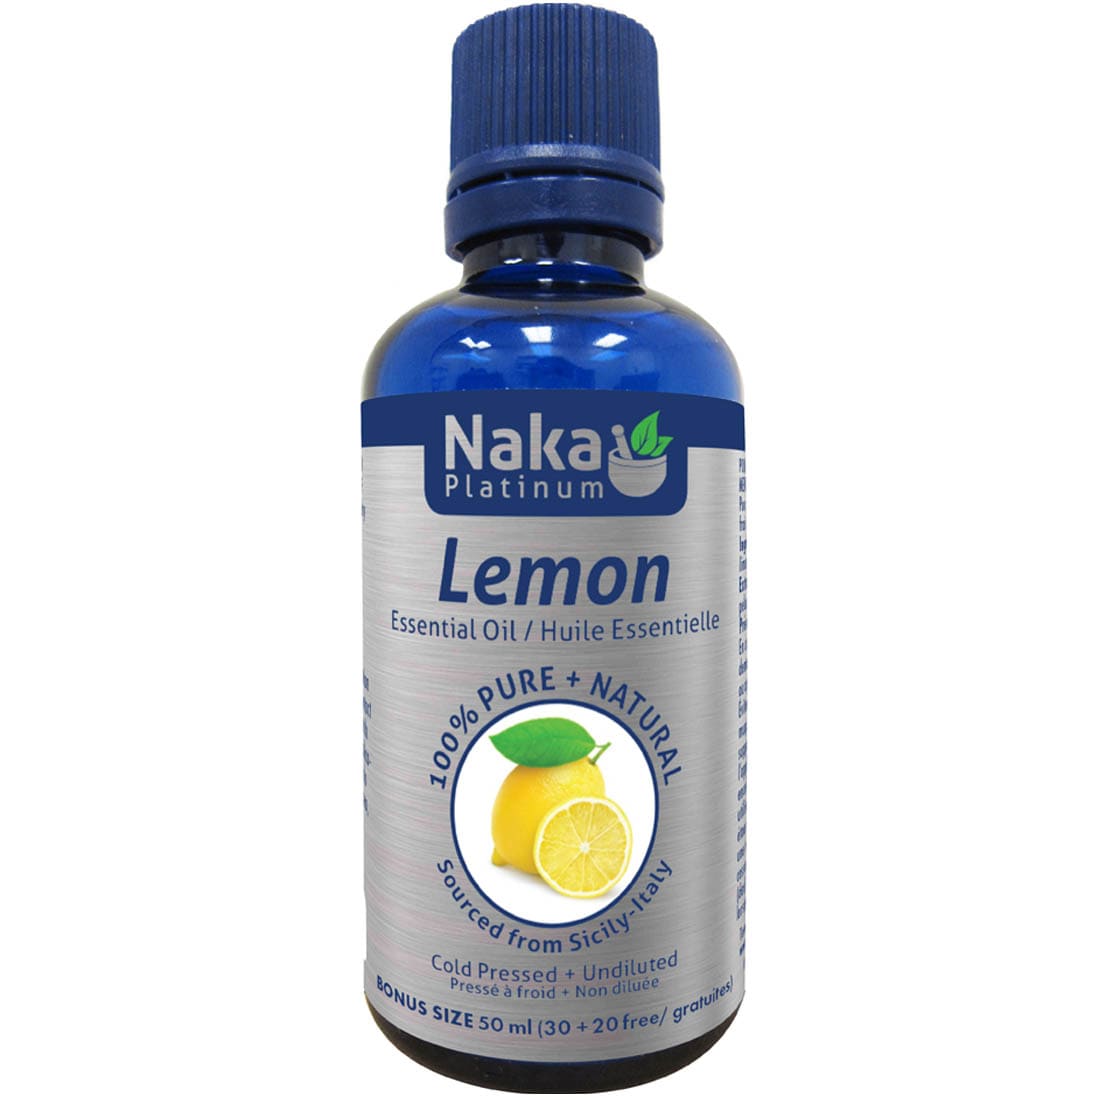 Naka Pro Lemon (Essential Oil 100% Pure), 50ml (NEW!)